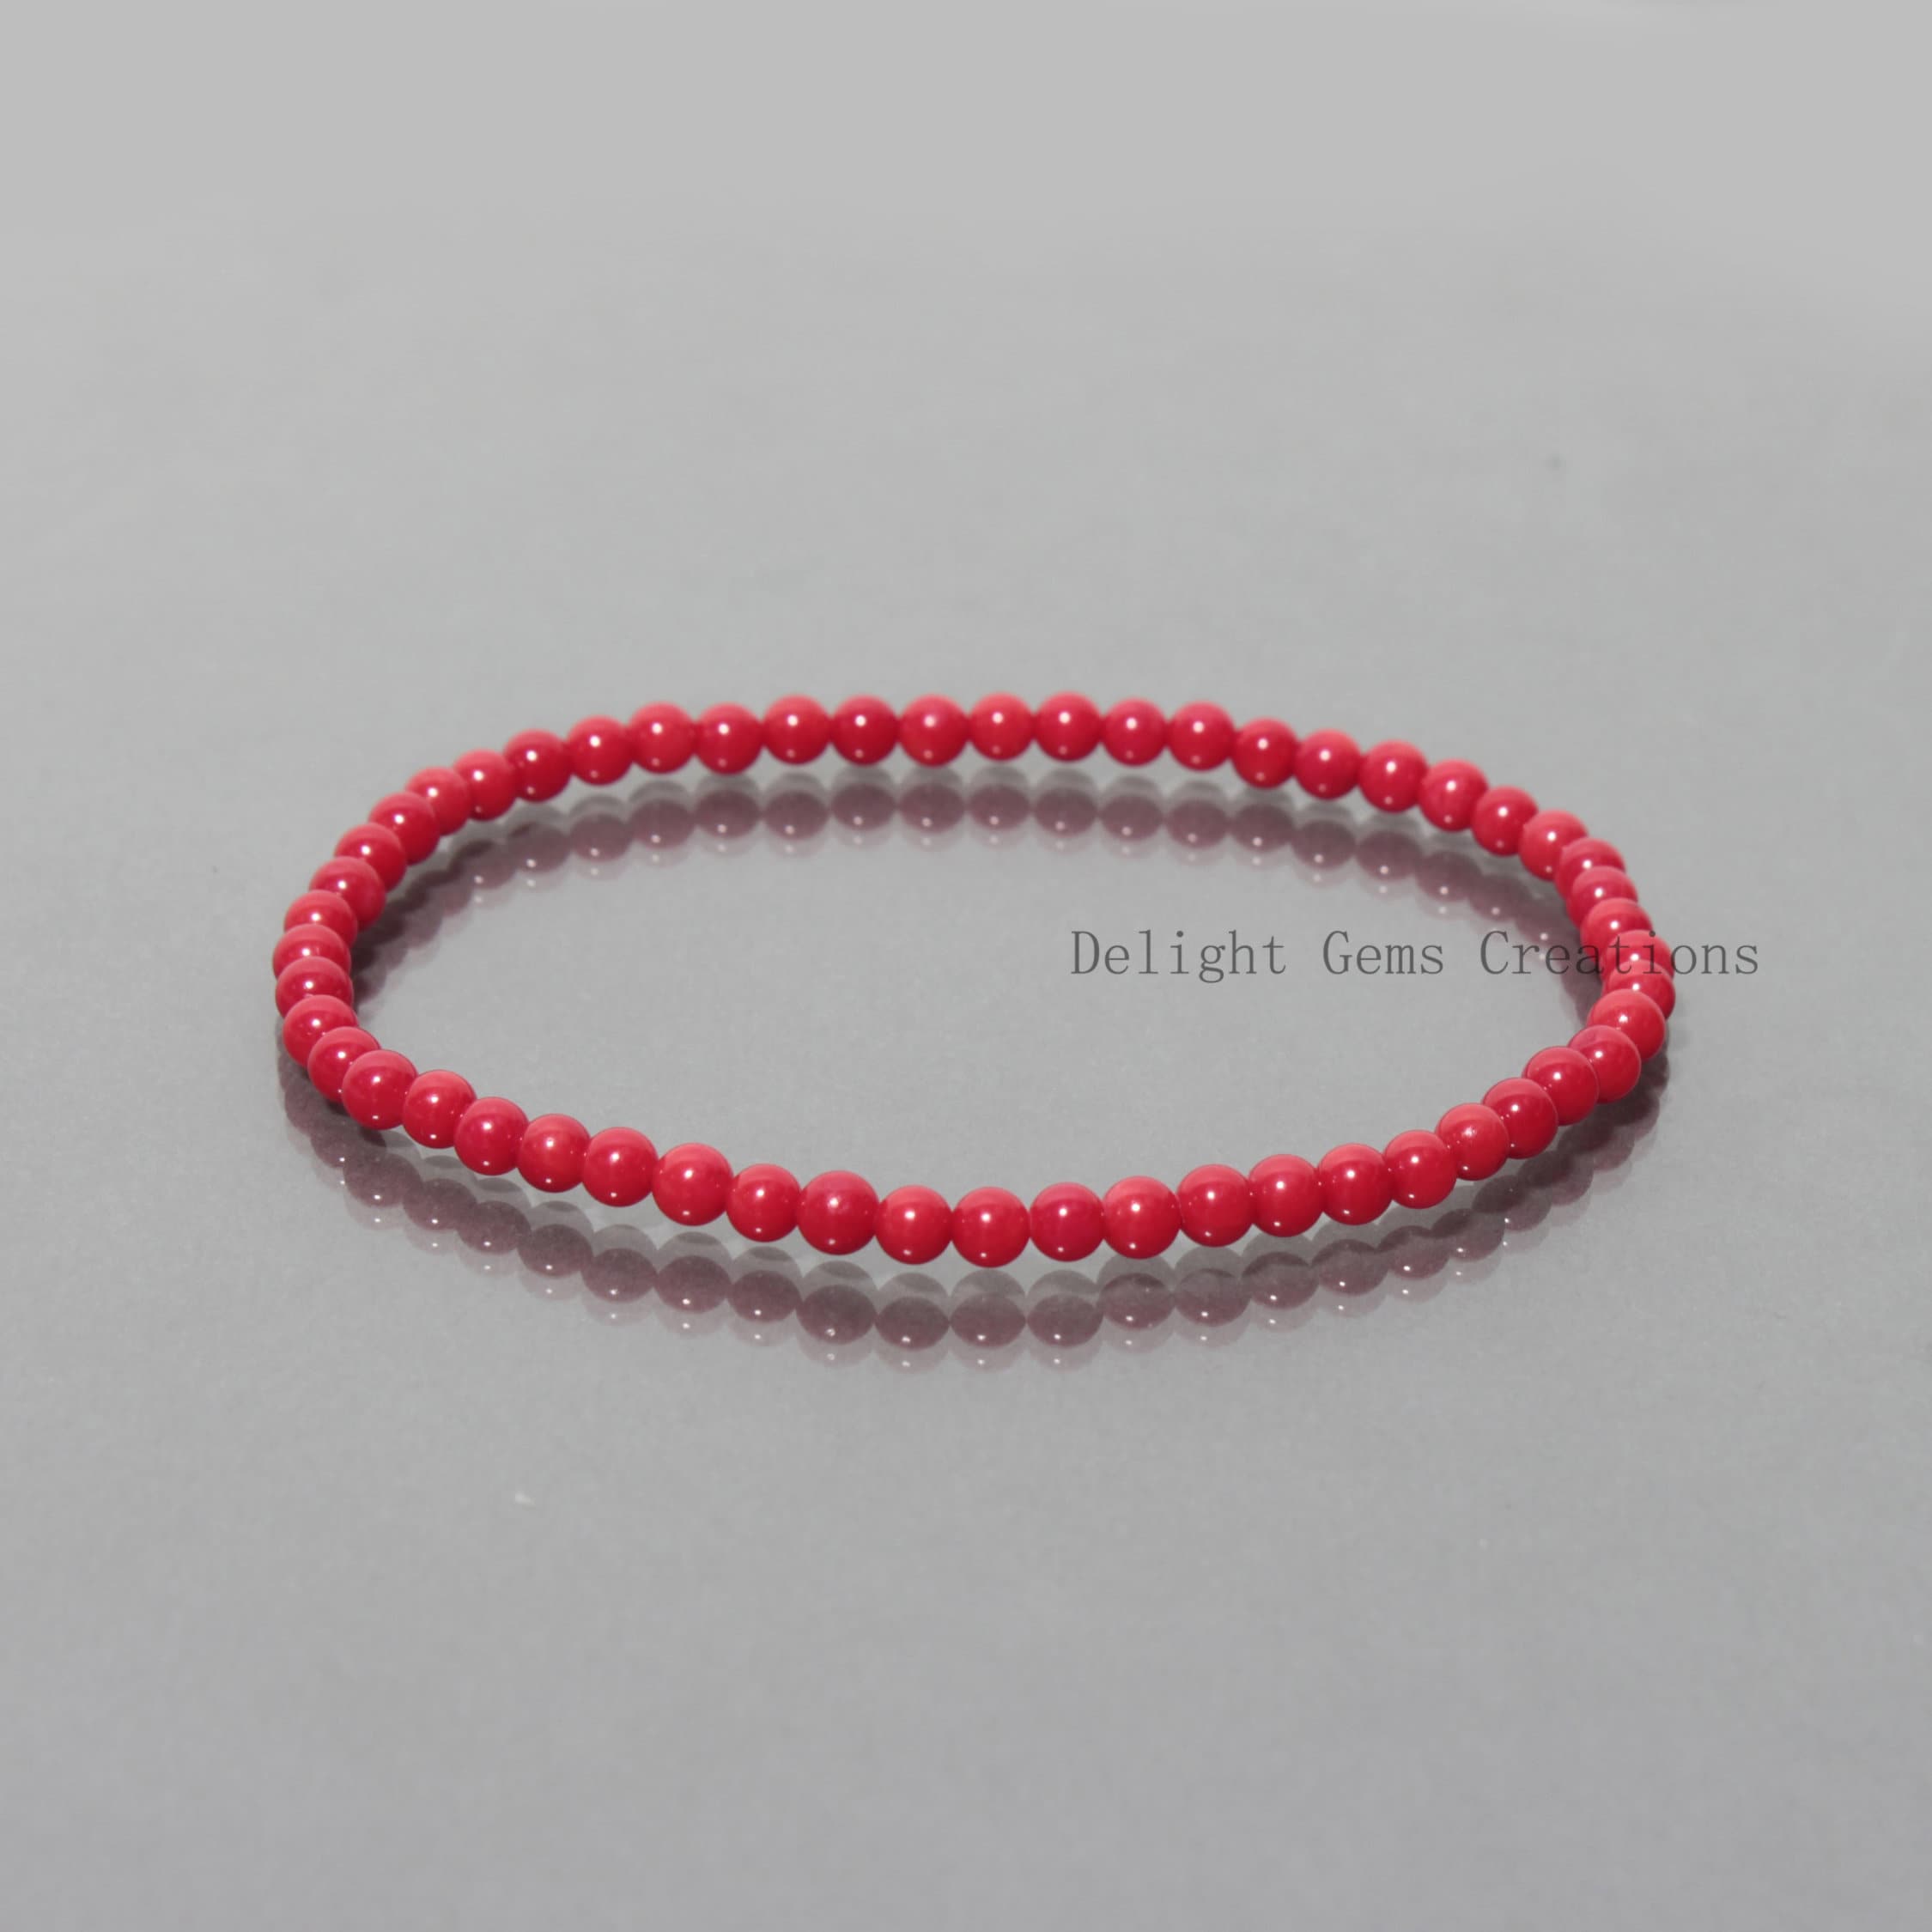 Red Coral Beads, 2.5mm 3mm 4mm 6mm 8mm 10mm 12mm Round Coral Beads